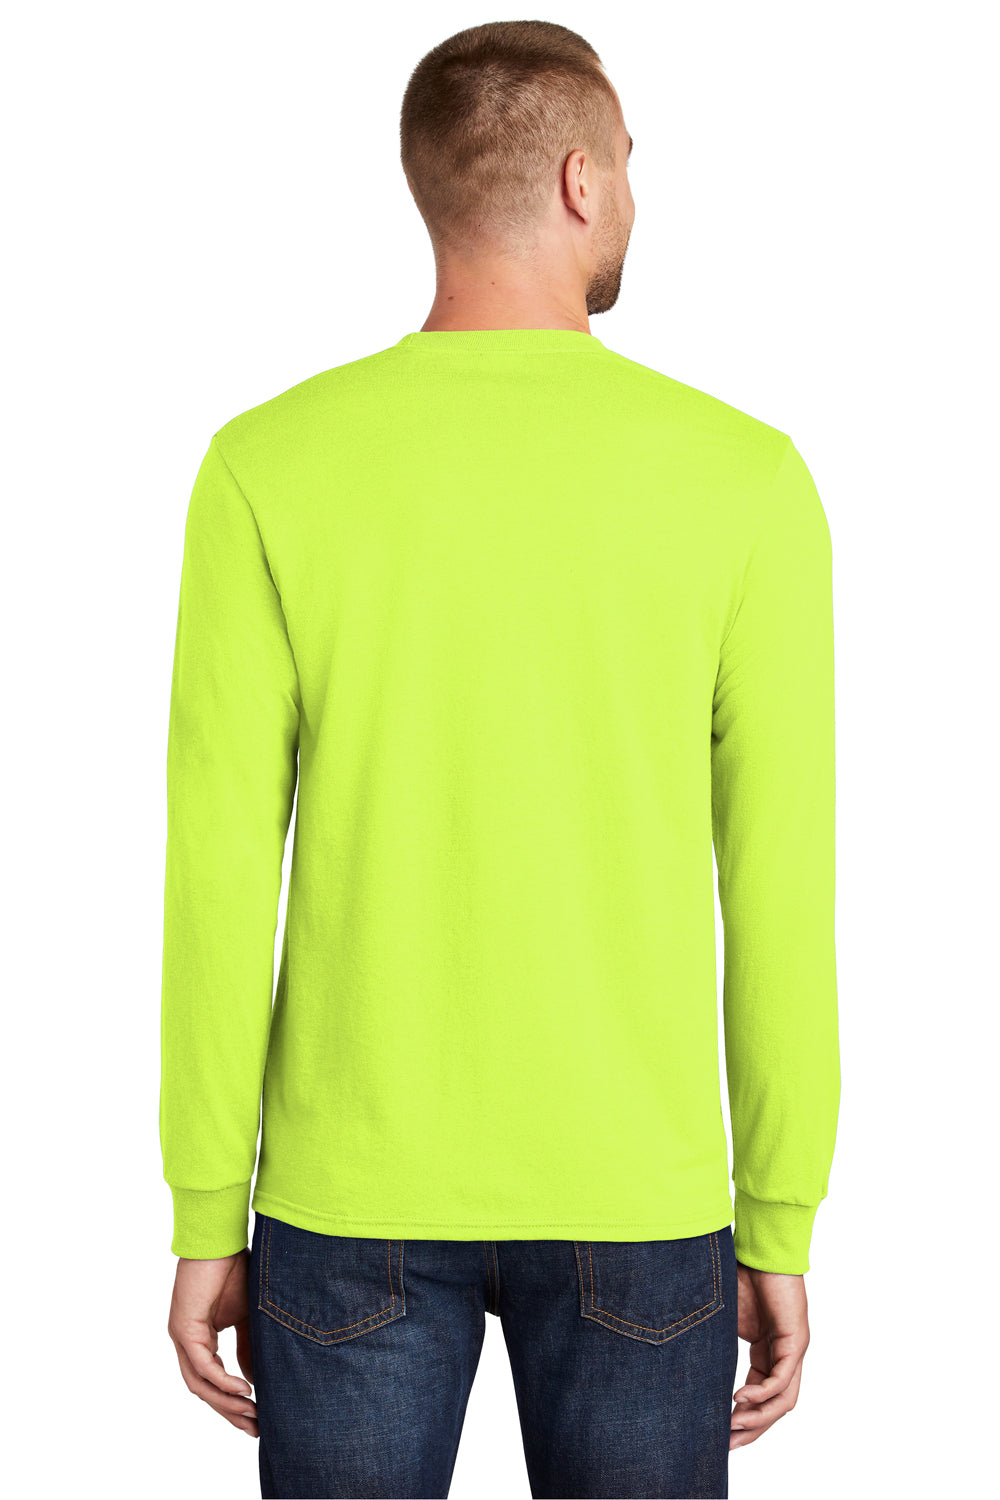 Port & Company PC55LS Mens Core Long Sleeve Crewneck T-Shirt Safety Green Back